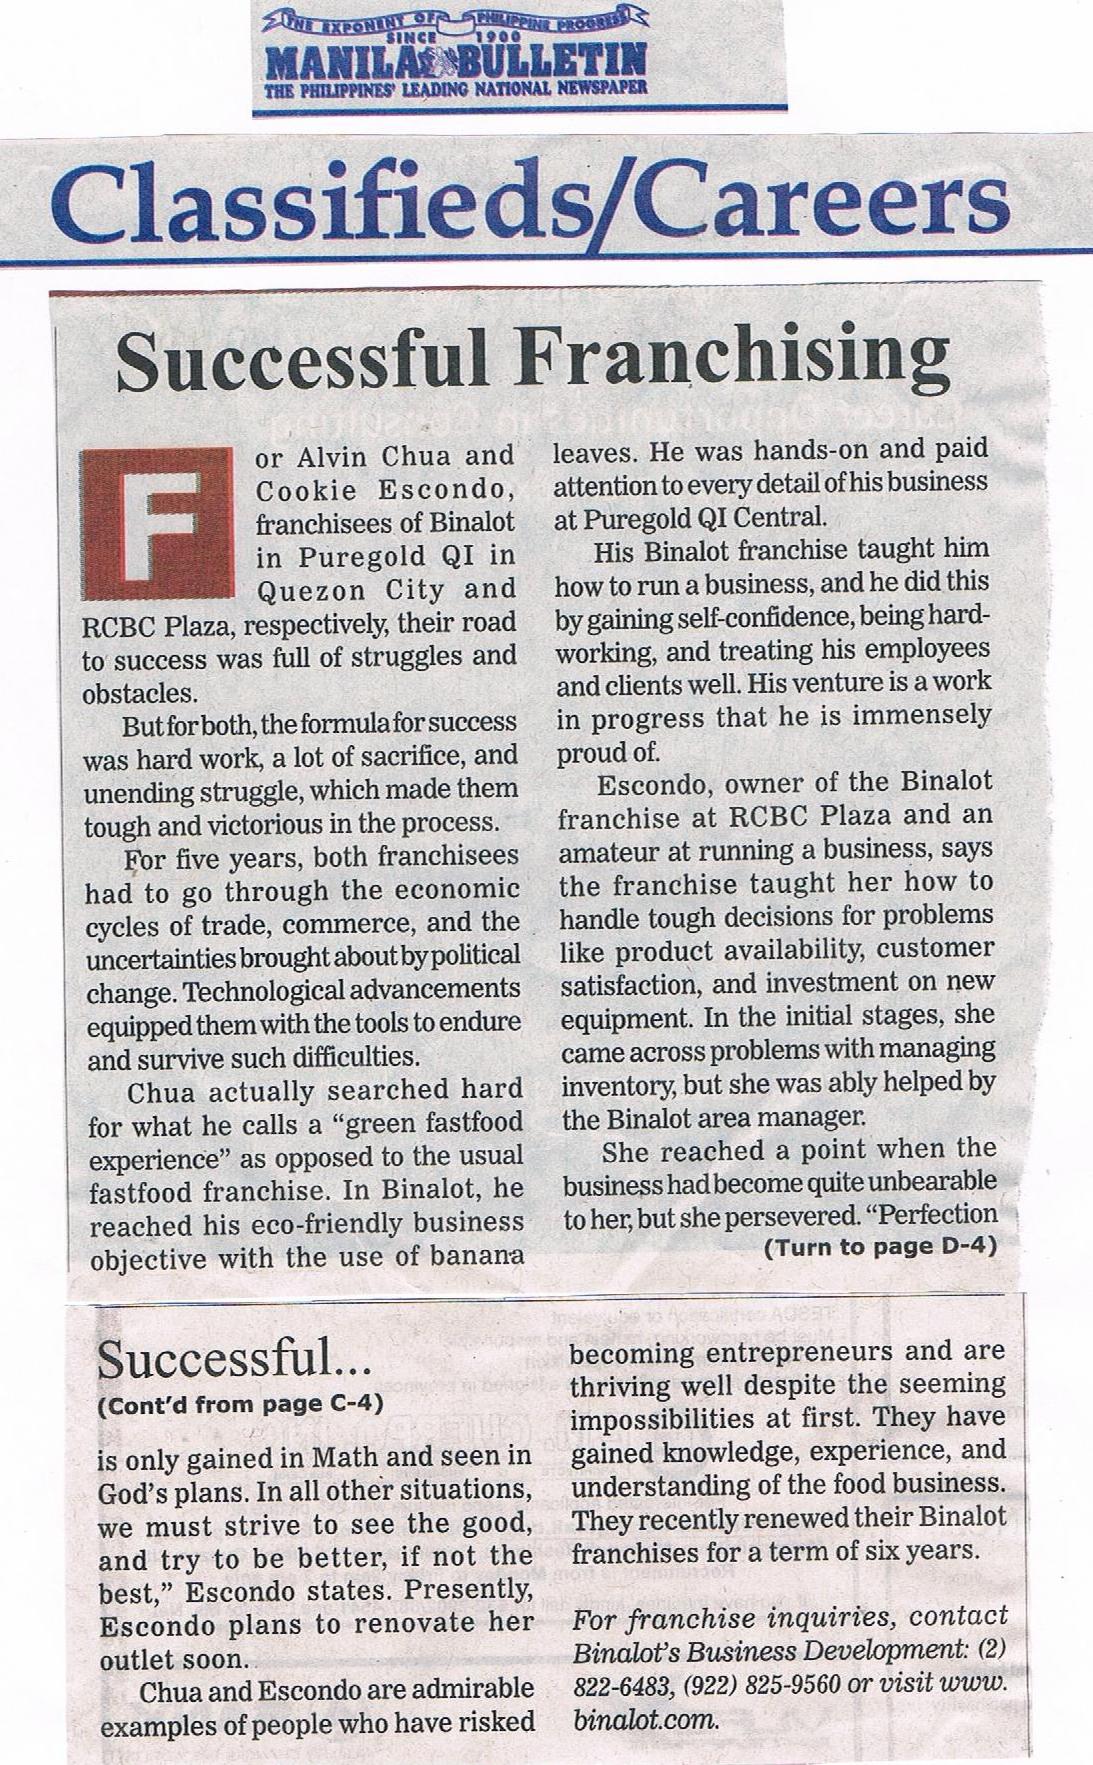 Succesfull Franchising, July 14, 2013, Manila Bulletin